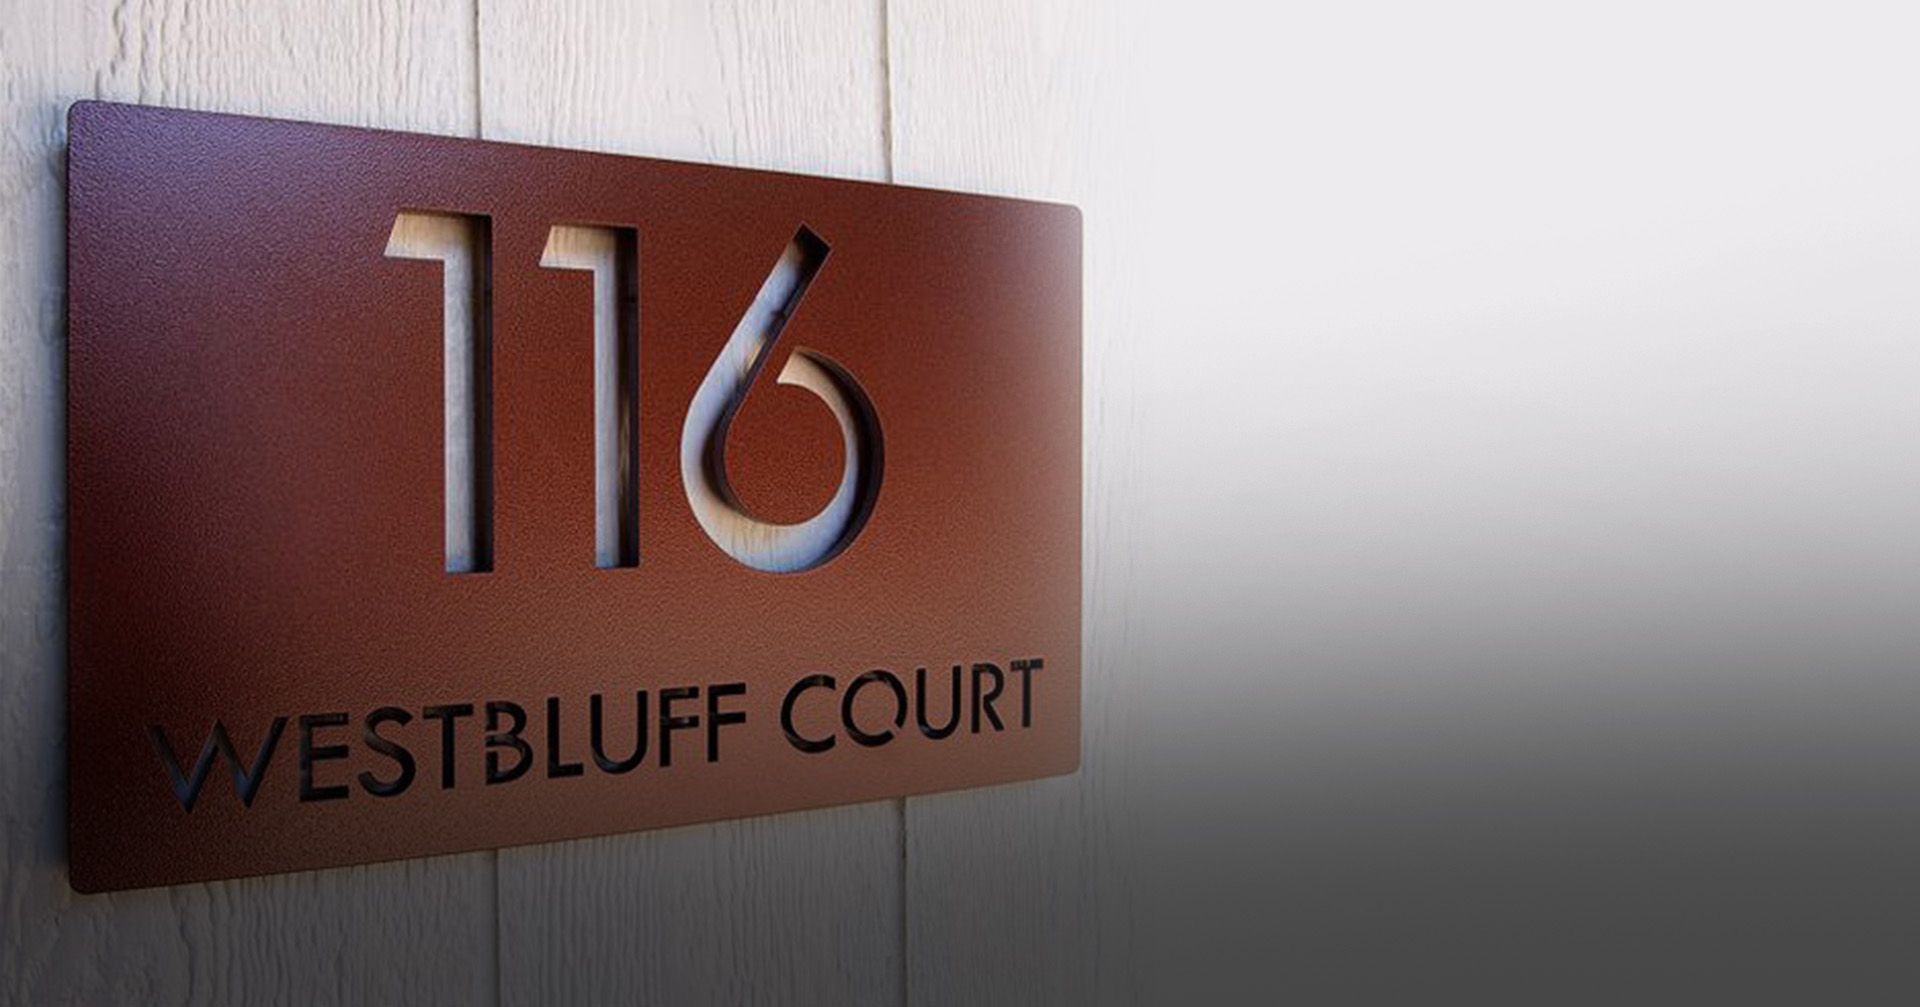 116 Westbluff Court Signage